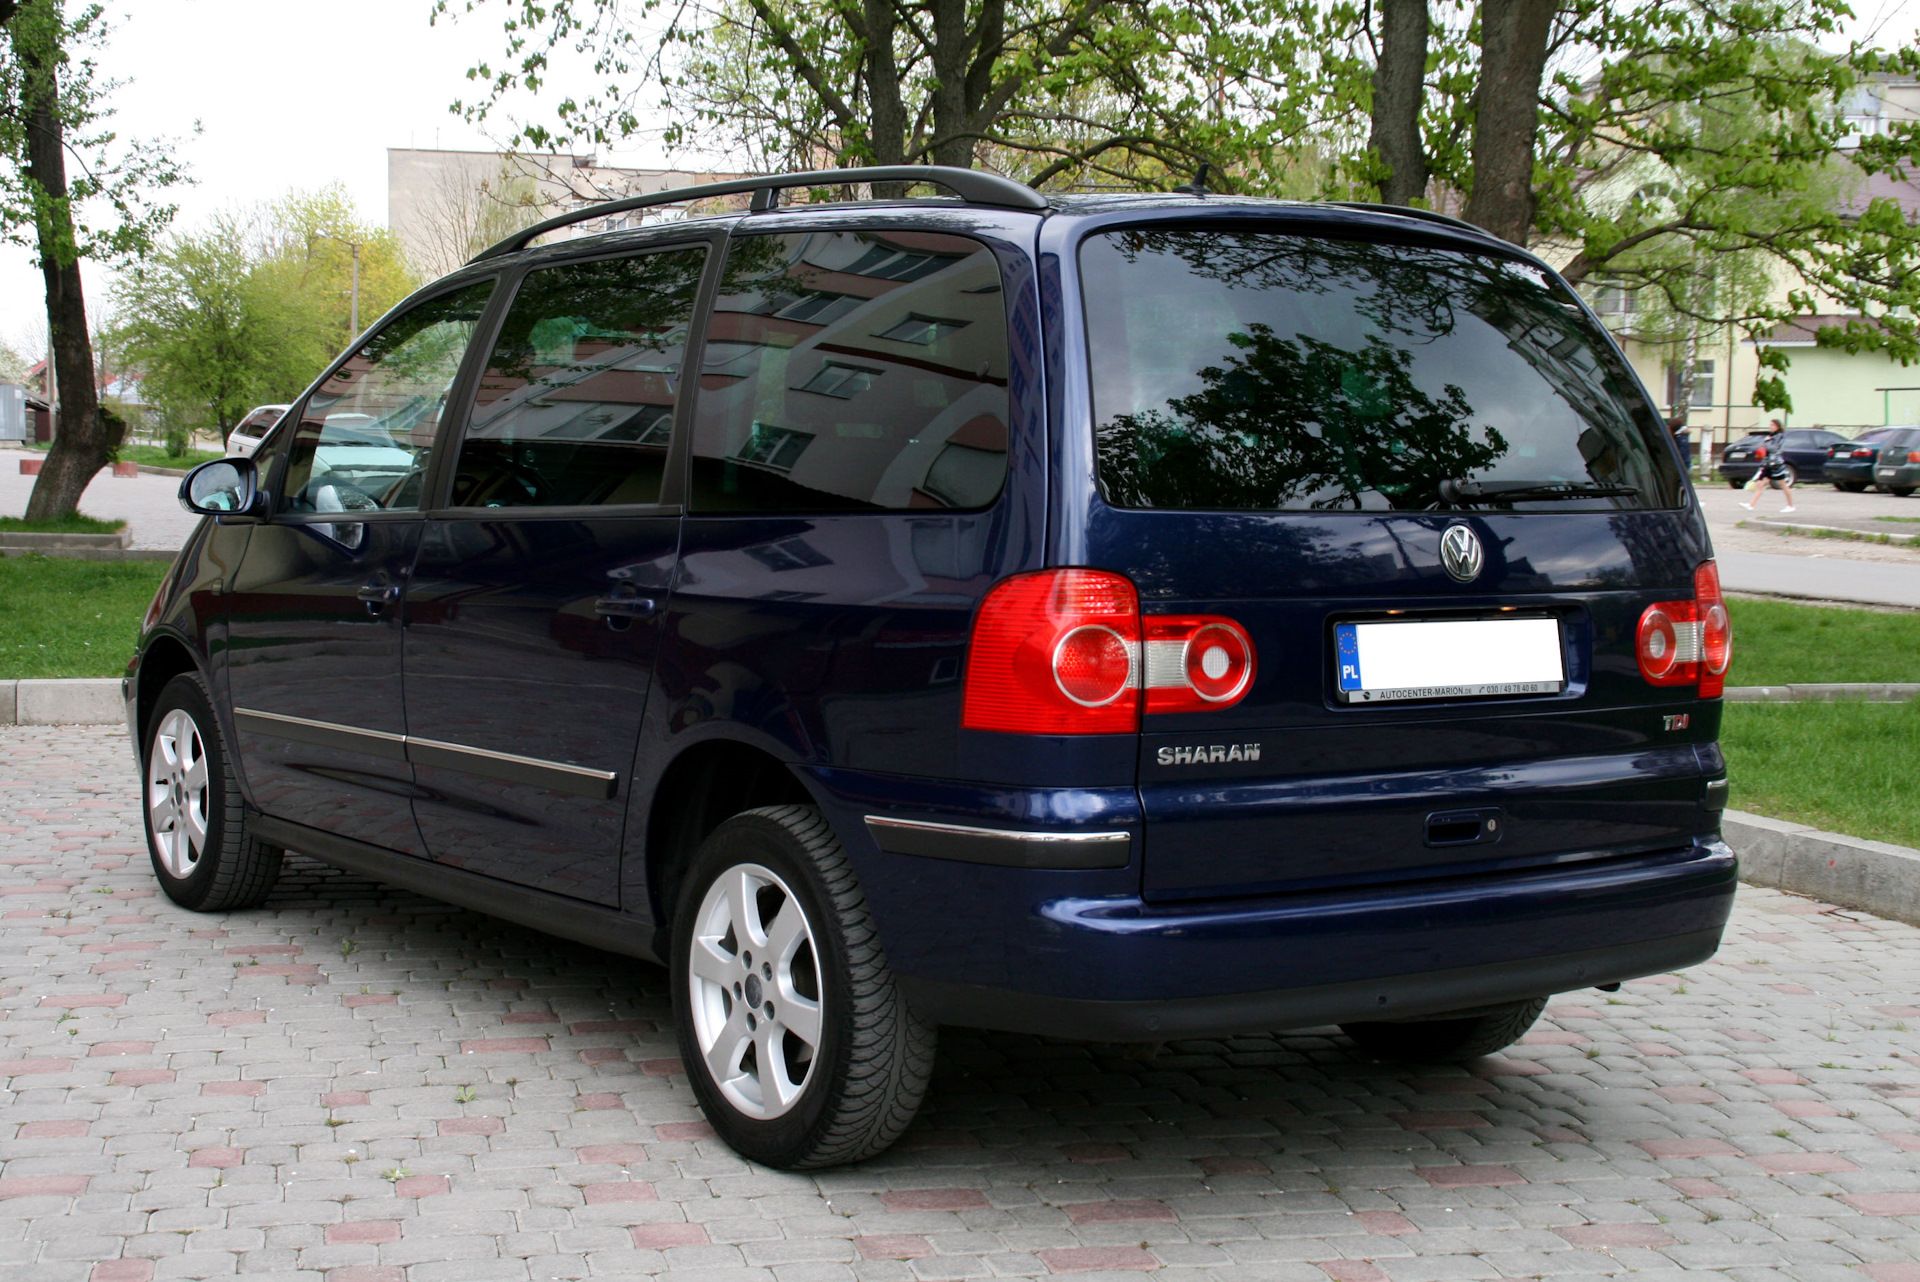 Volkswagen sharan 2001. Фольксваген Шаран 1. Фольксваген Шаран 2001. Фольксваген Шаран 2001 года. Фольксваген Шаран 1.9 дизель.